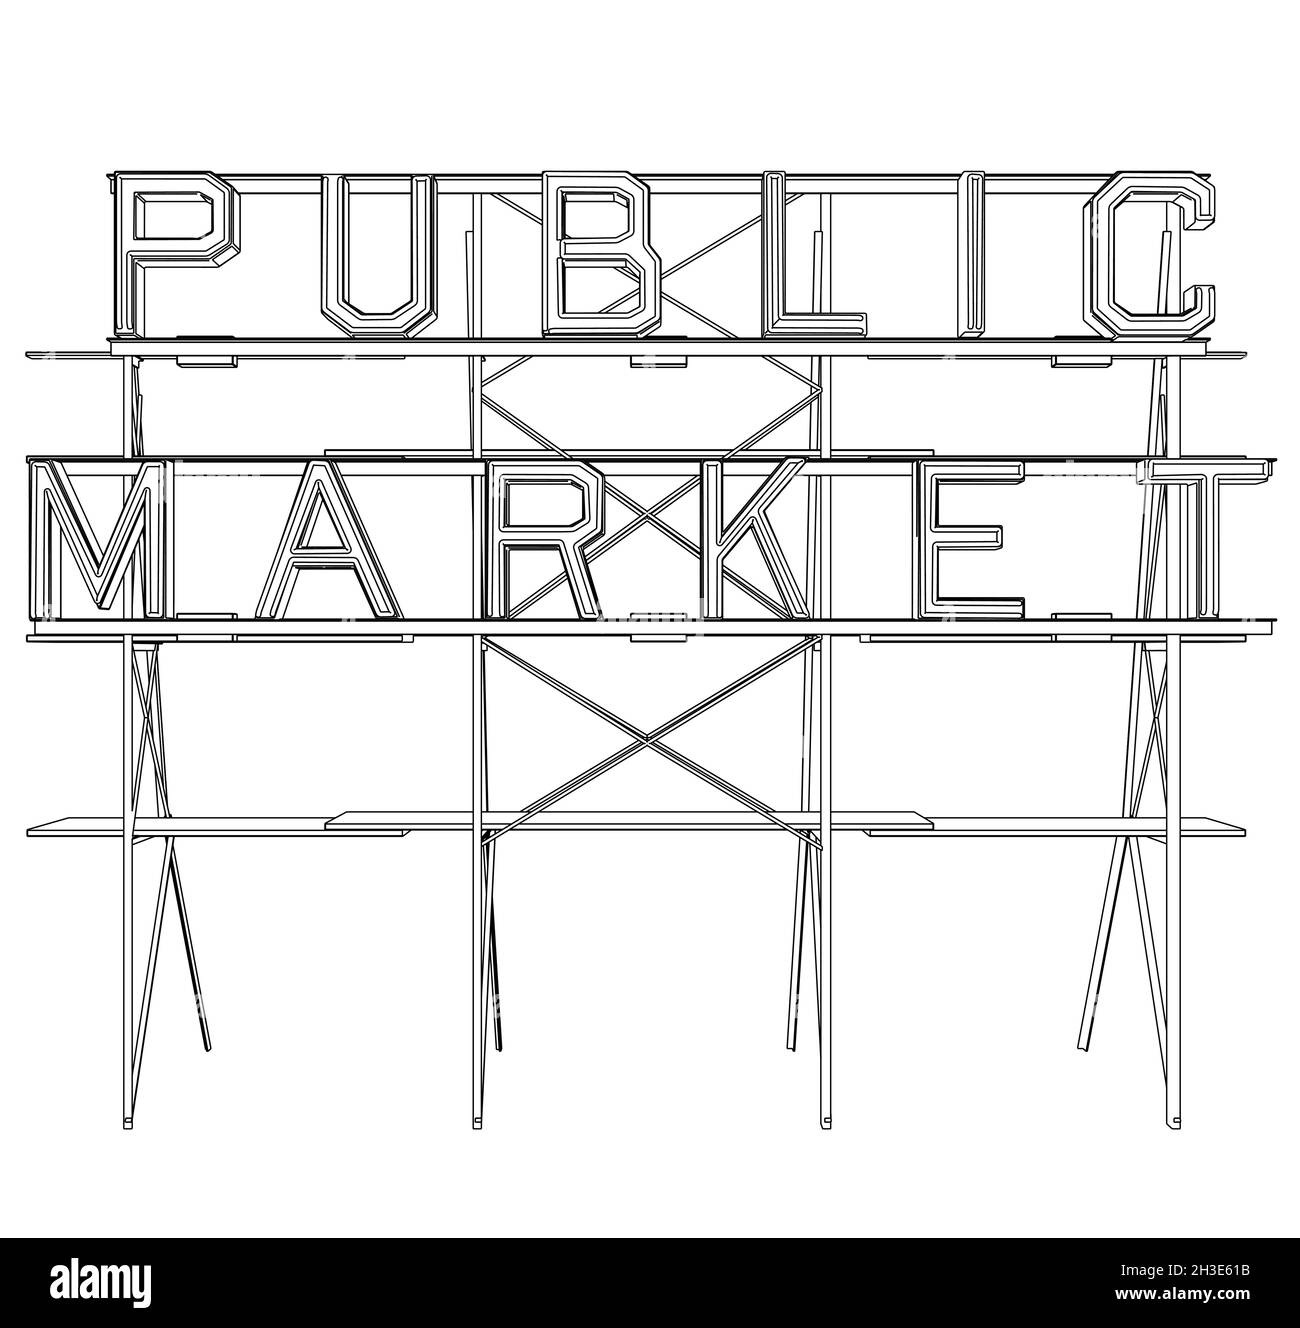 Market Quarter - feedback - Teignbridge District Council